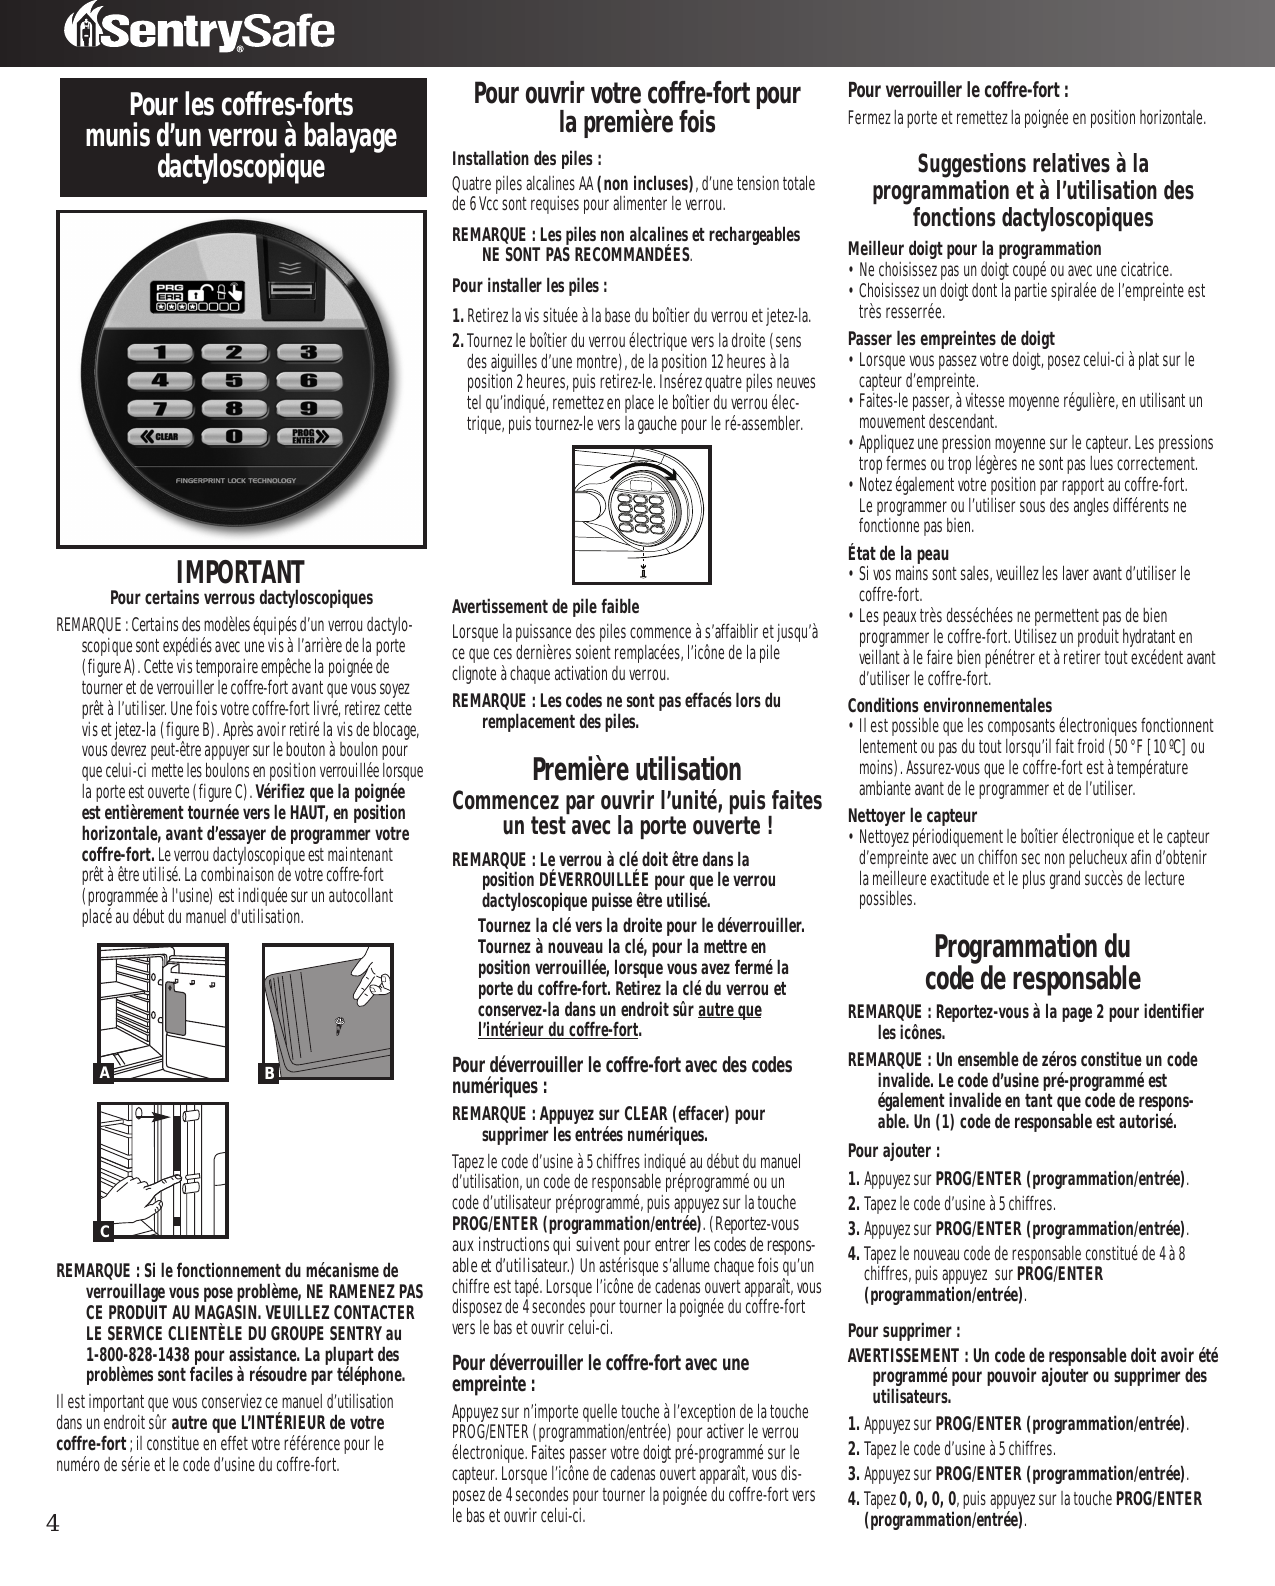 Page 4 of 8 - 077-3799 M01 ComSafe OMRev 1195-manual